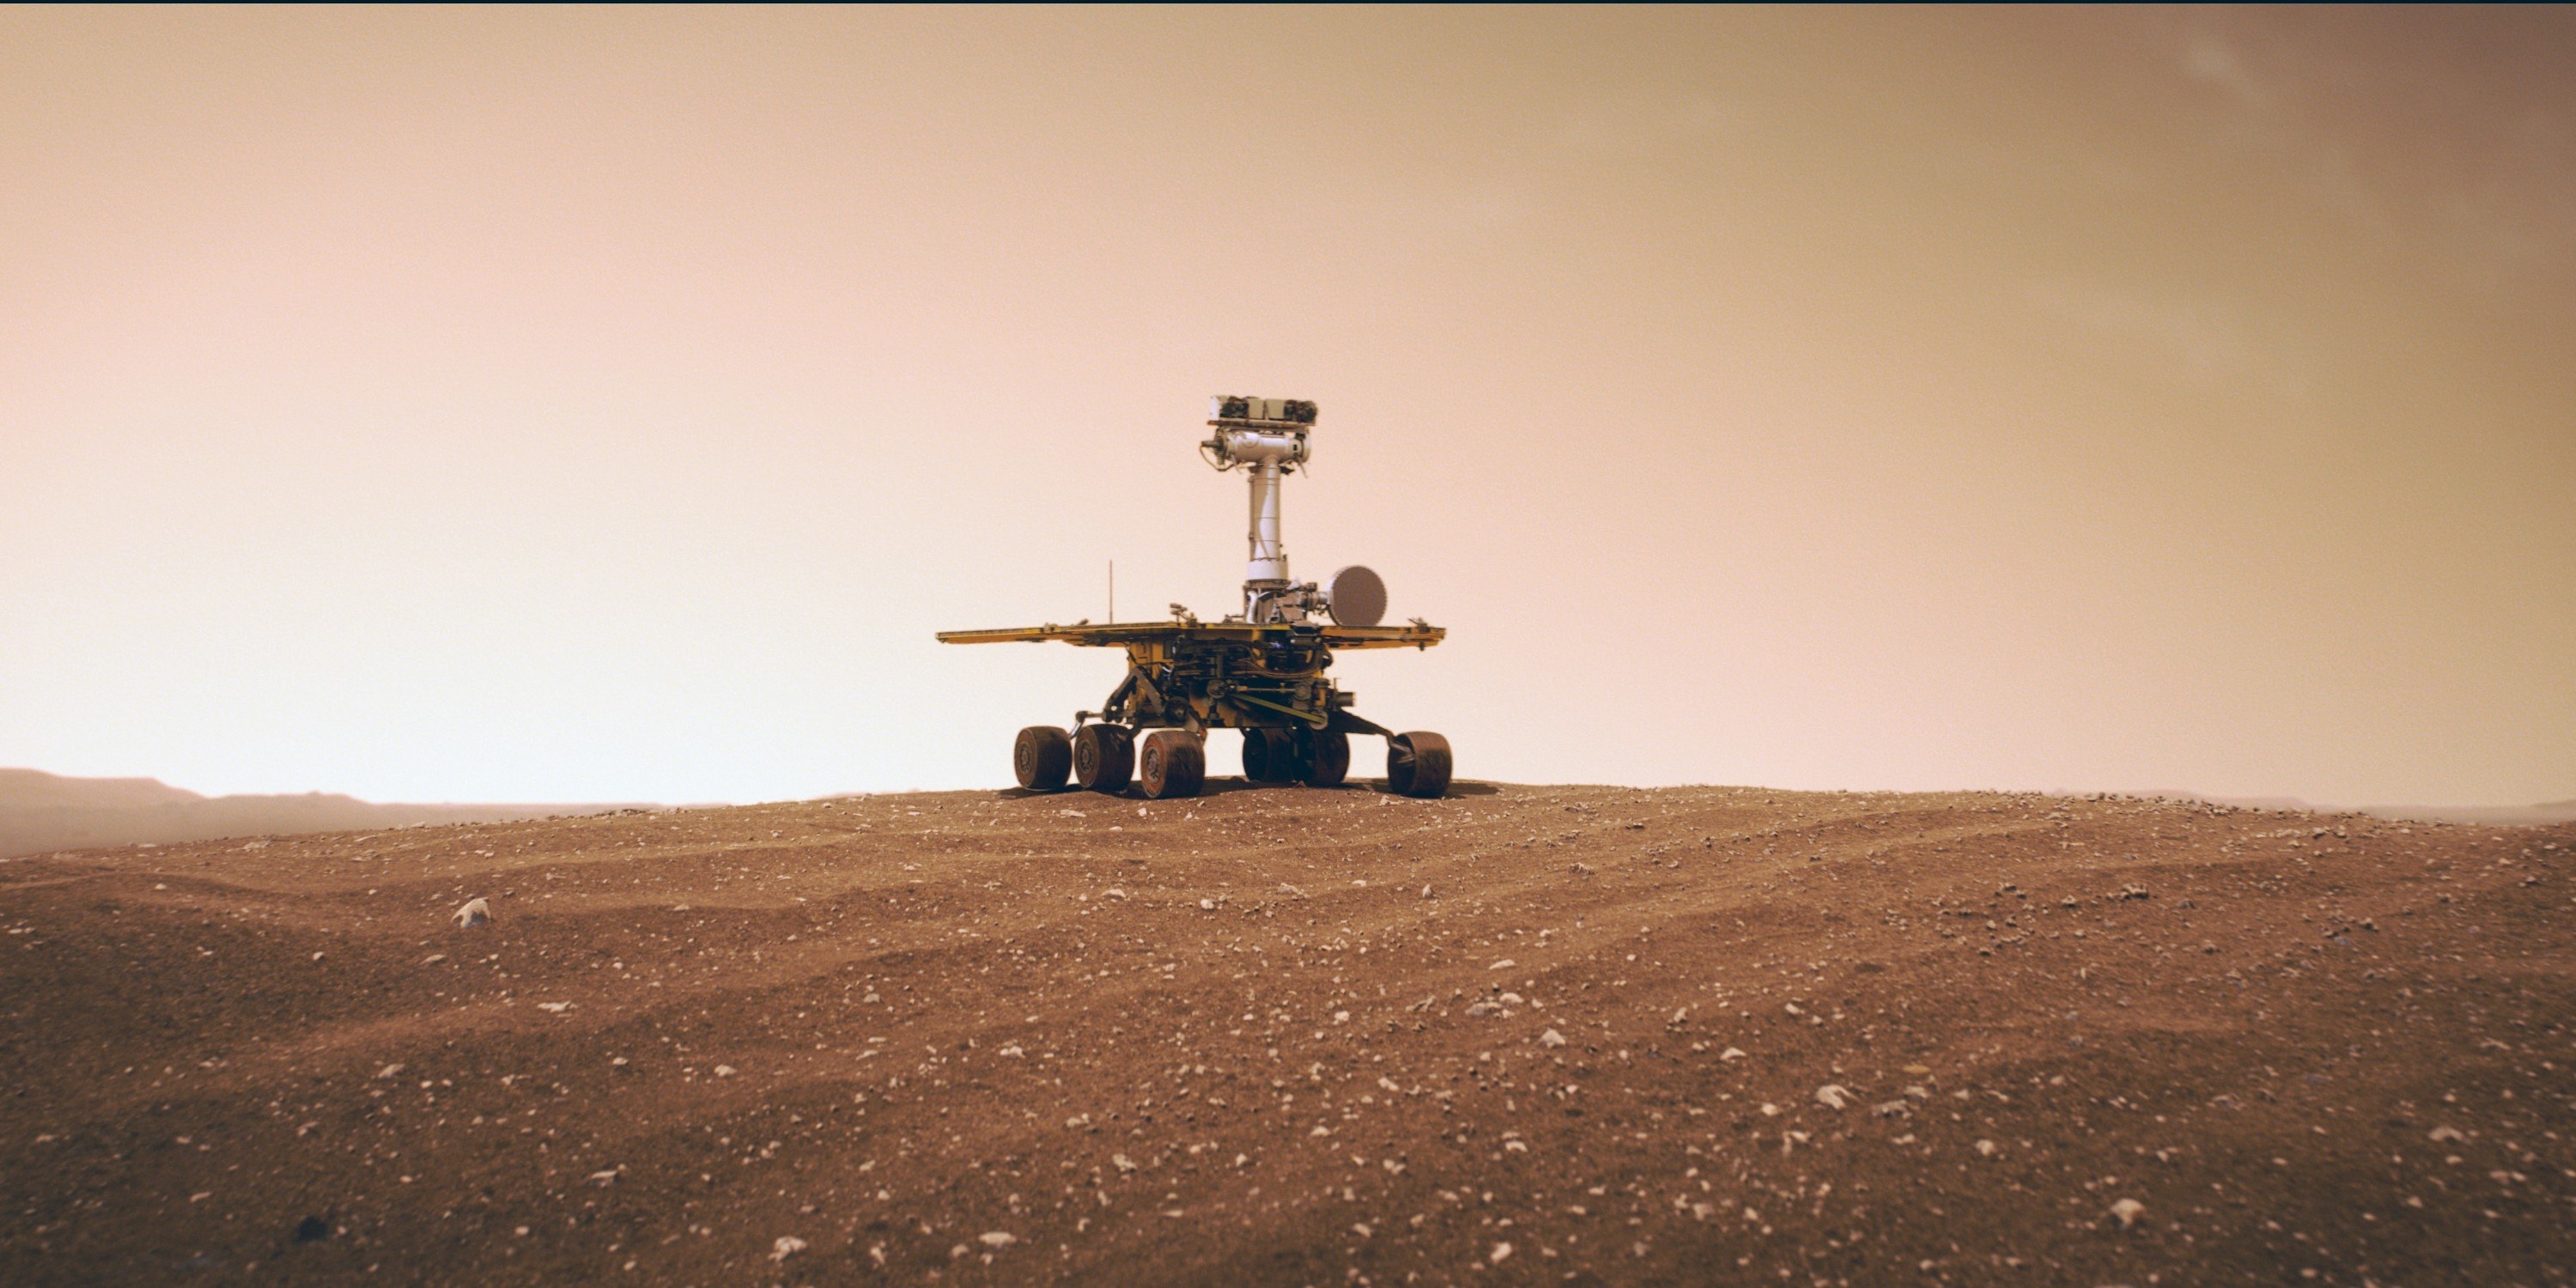 Mars Rover Opportunity on Mars